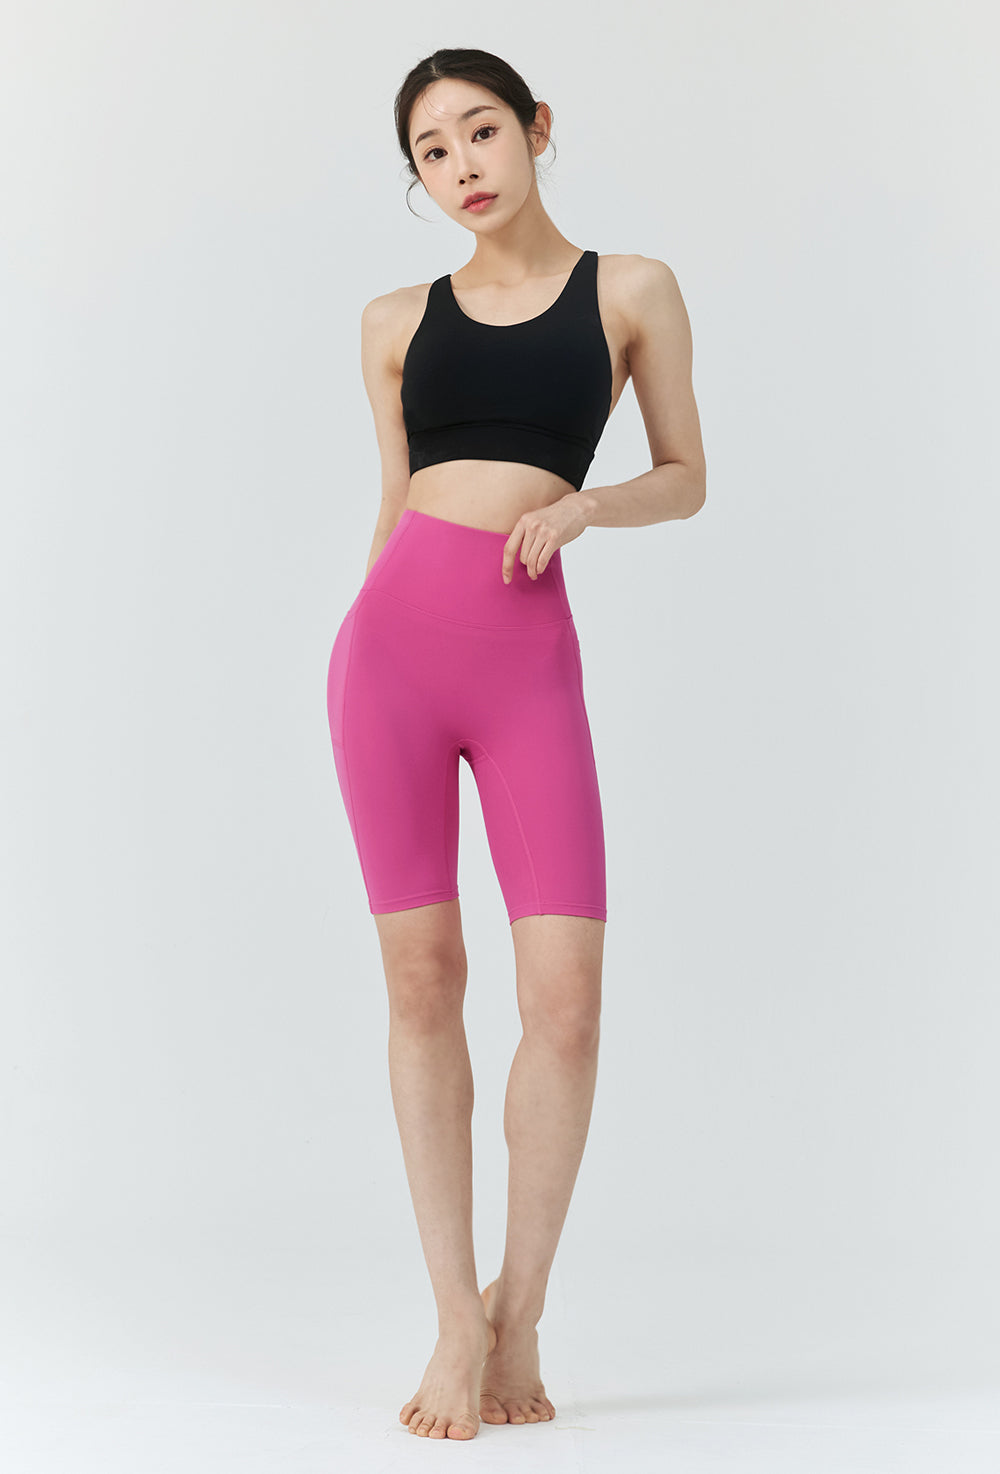 Black Label Signature 330N 4.5 Shorts - Magenta Pink